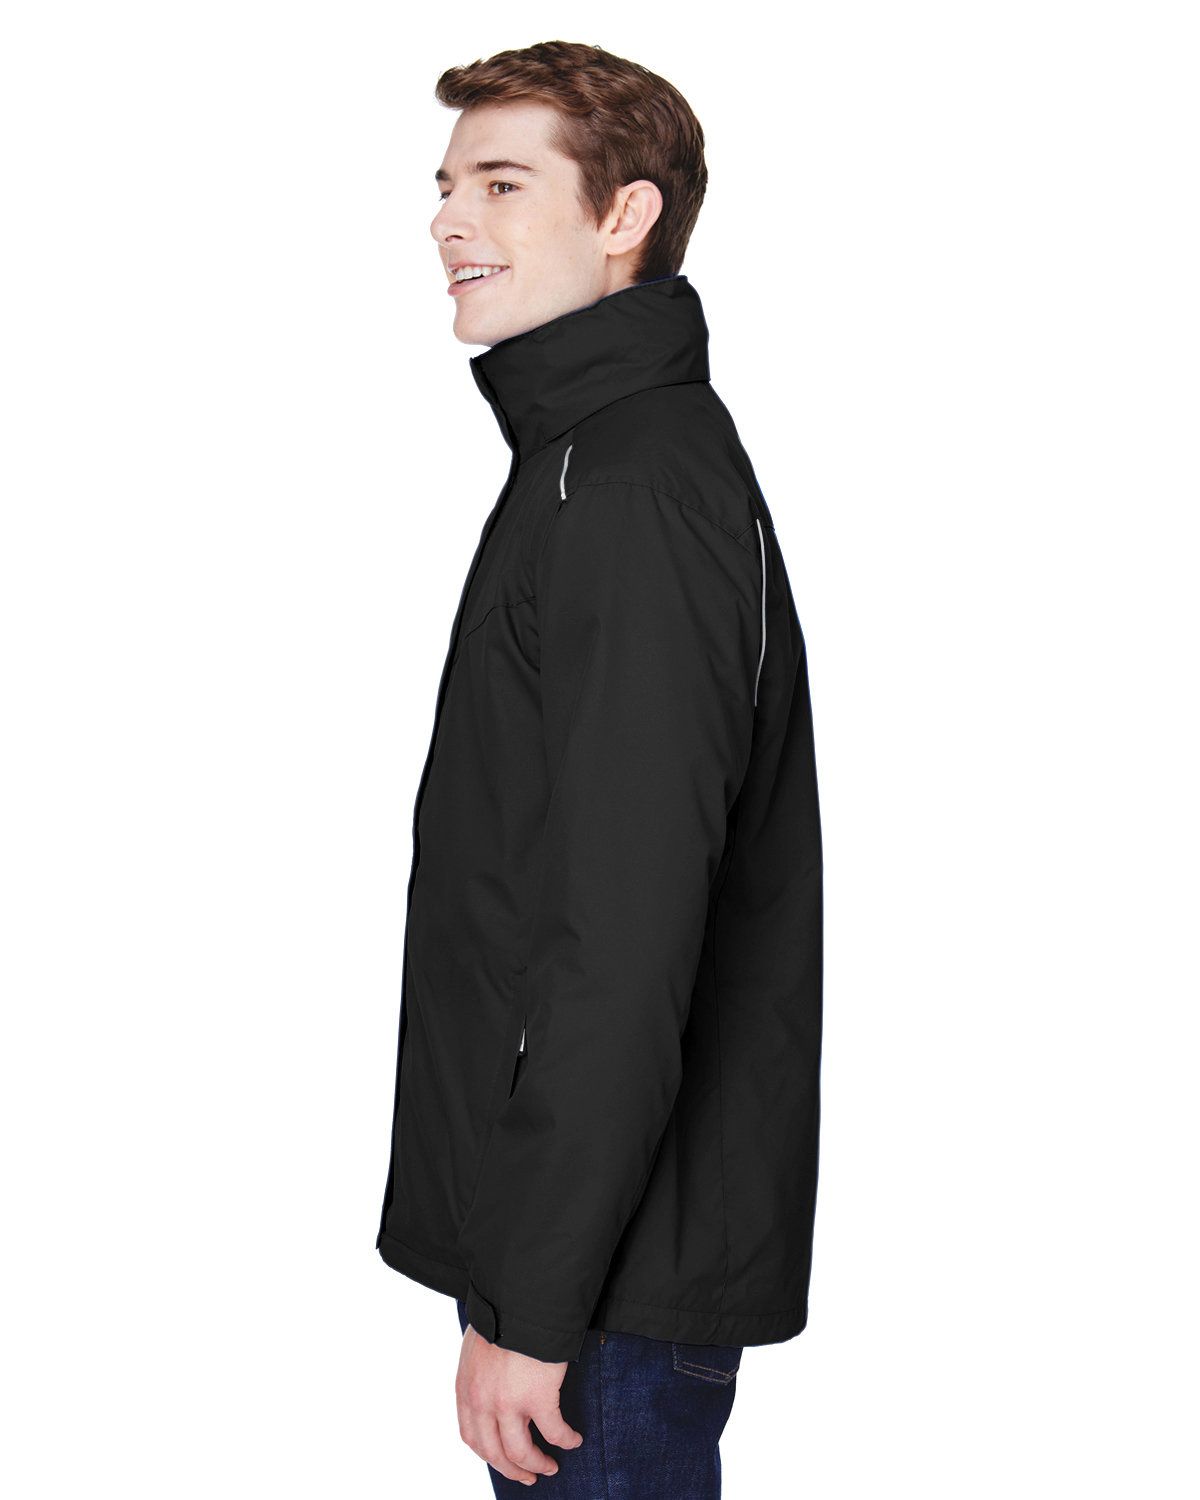 'Ash City - Core 365 88205T Men's Tall Region 3-in-1 Jacket with Fleece Liner'